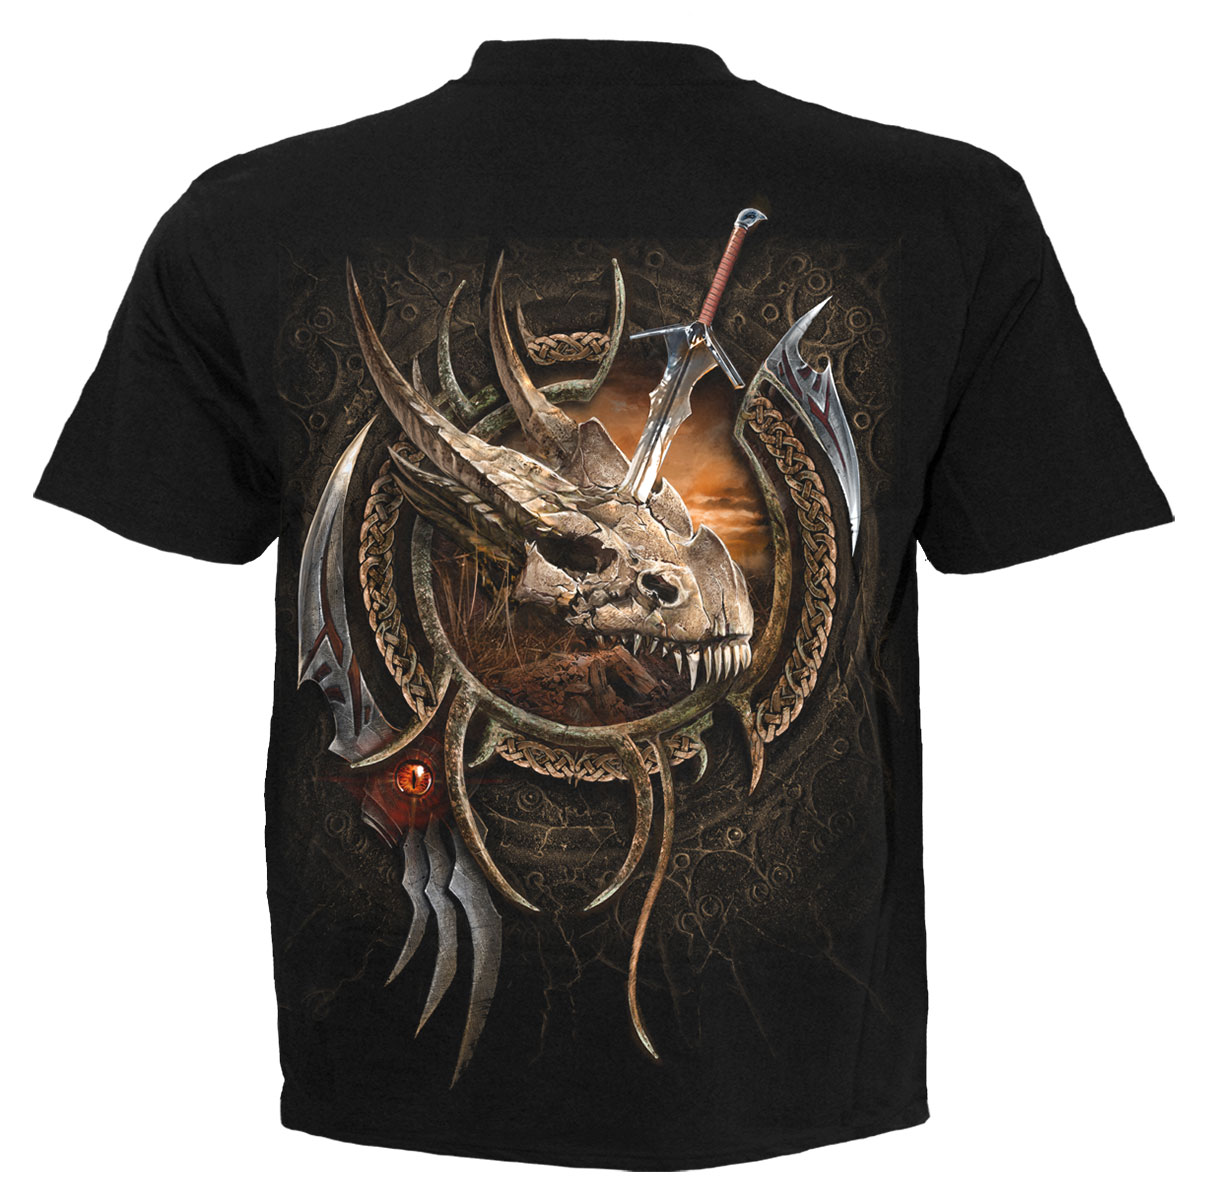 Spiral Centaur Slayer, T-Shirt Black|Viking|Dragon|Mystical|Celtic | eBay